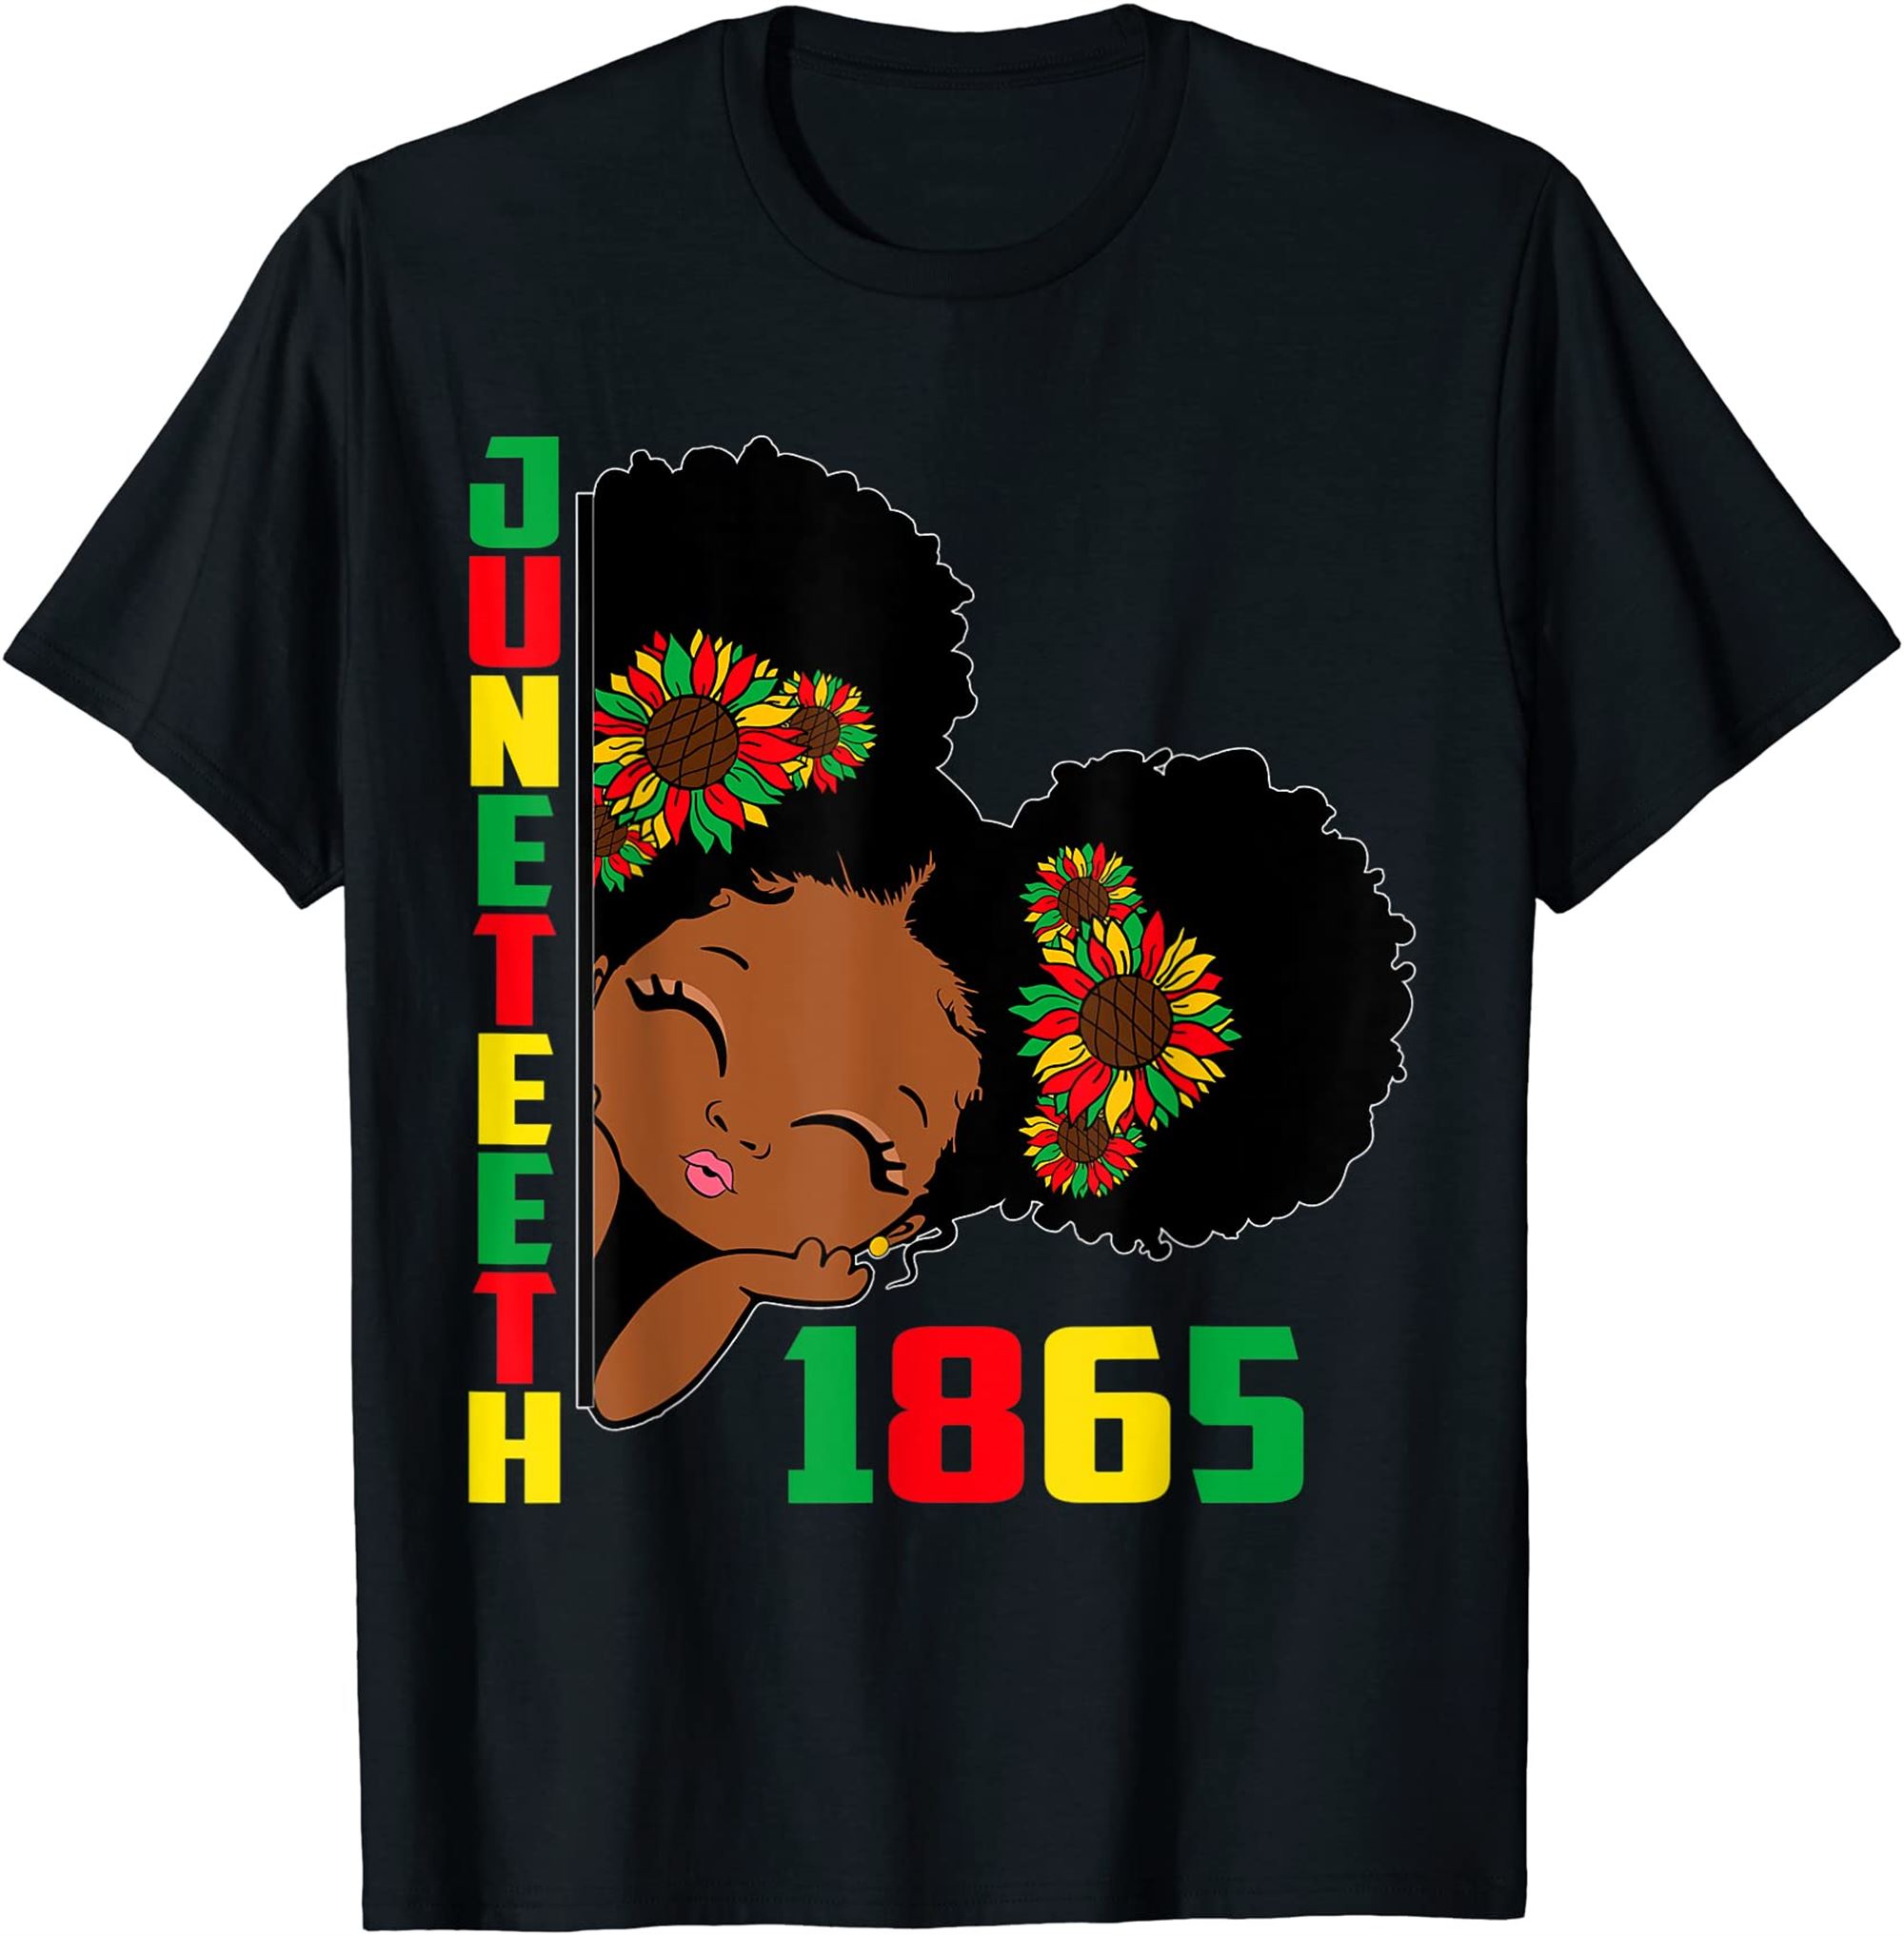 Juneteenth Celebrating 1865 Cute Black Girls Kids T-shirt Full Size Up To 5xl